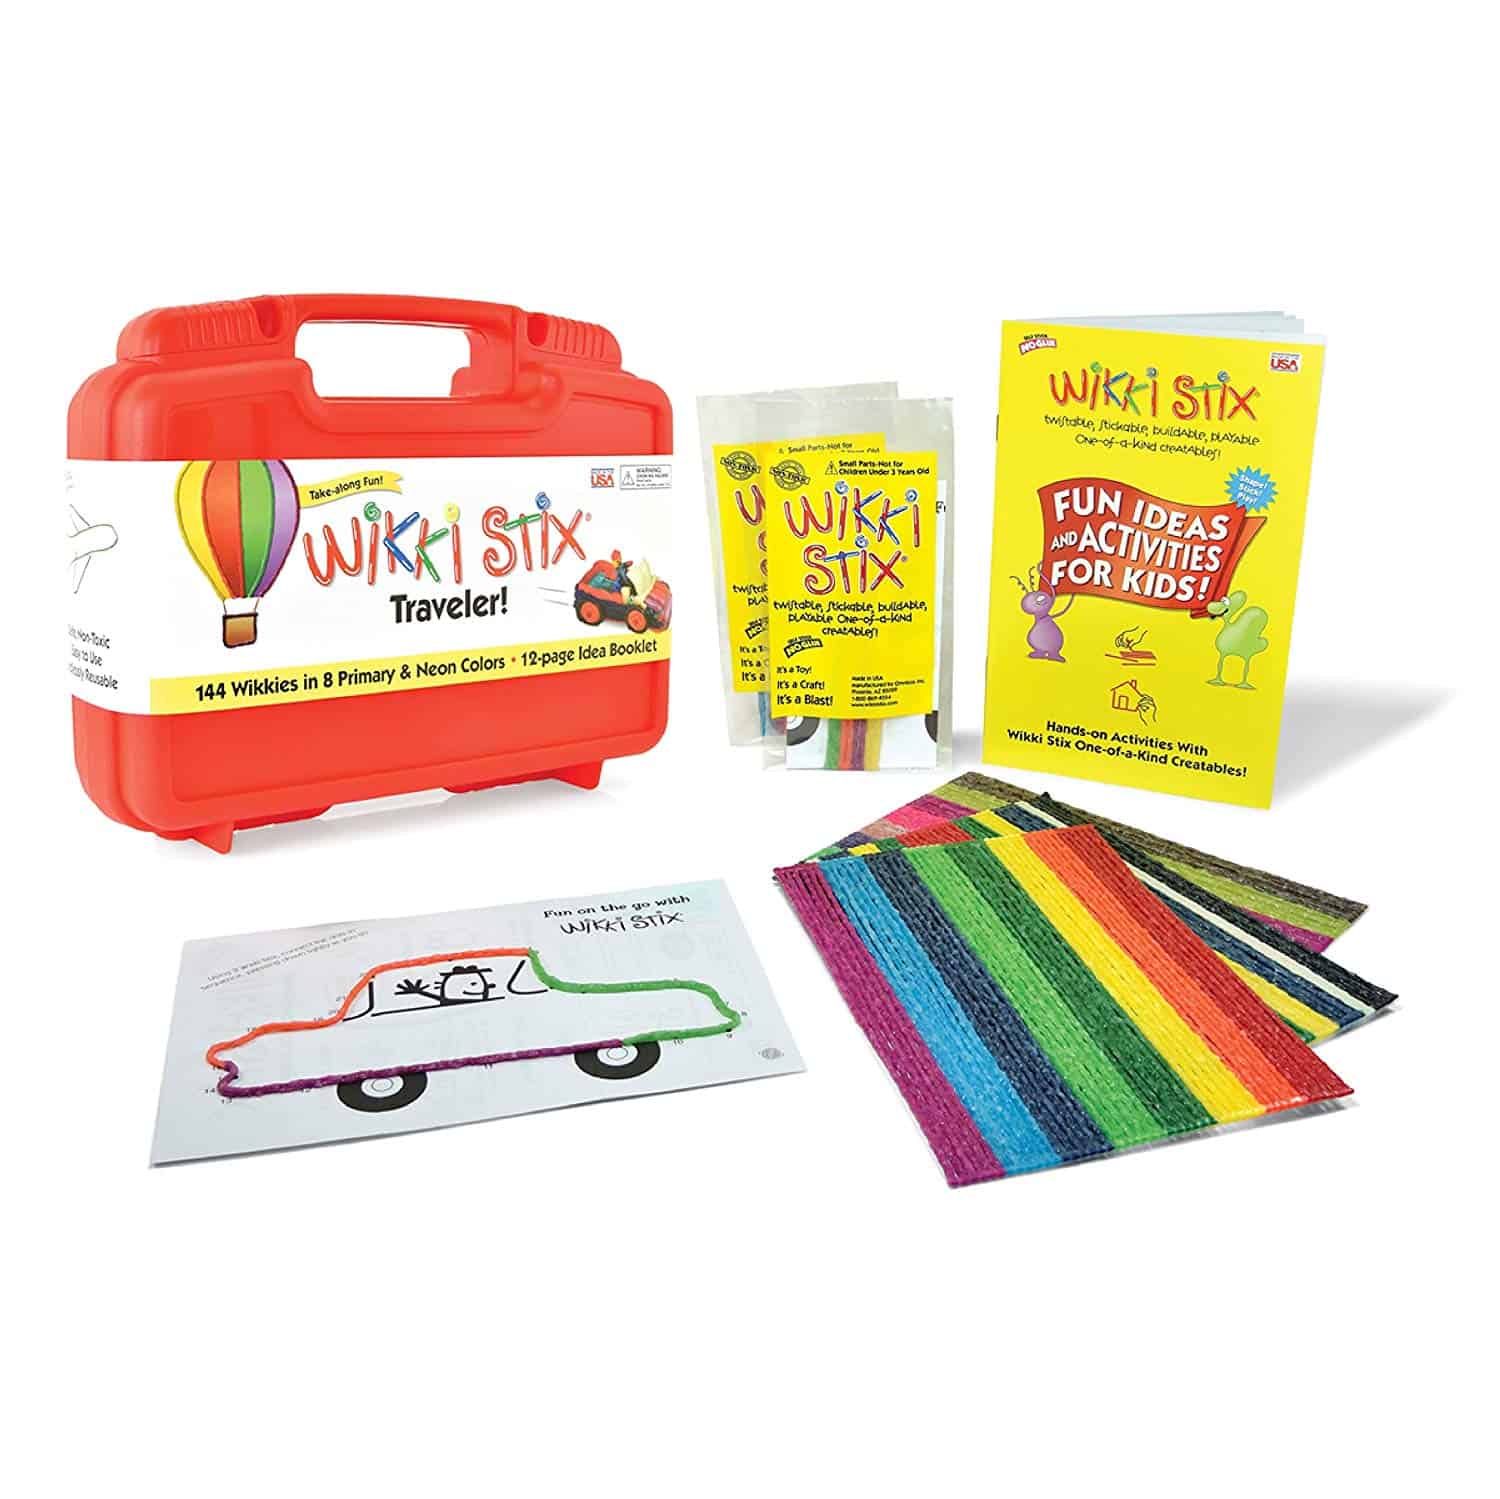 Wikki Stix creative car toy